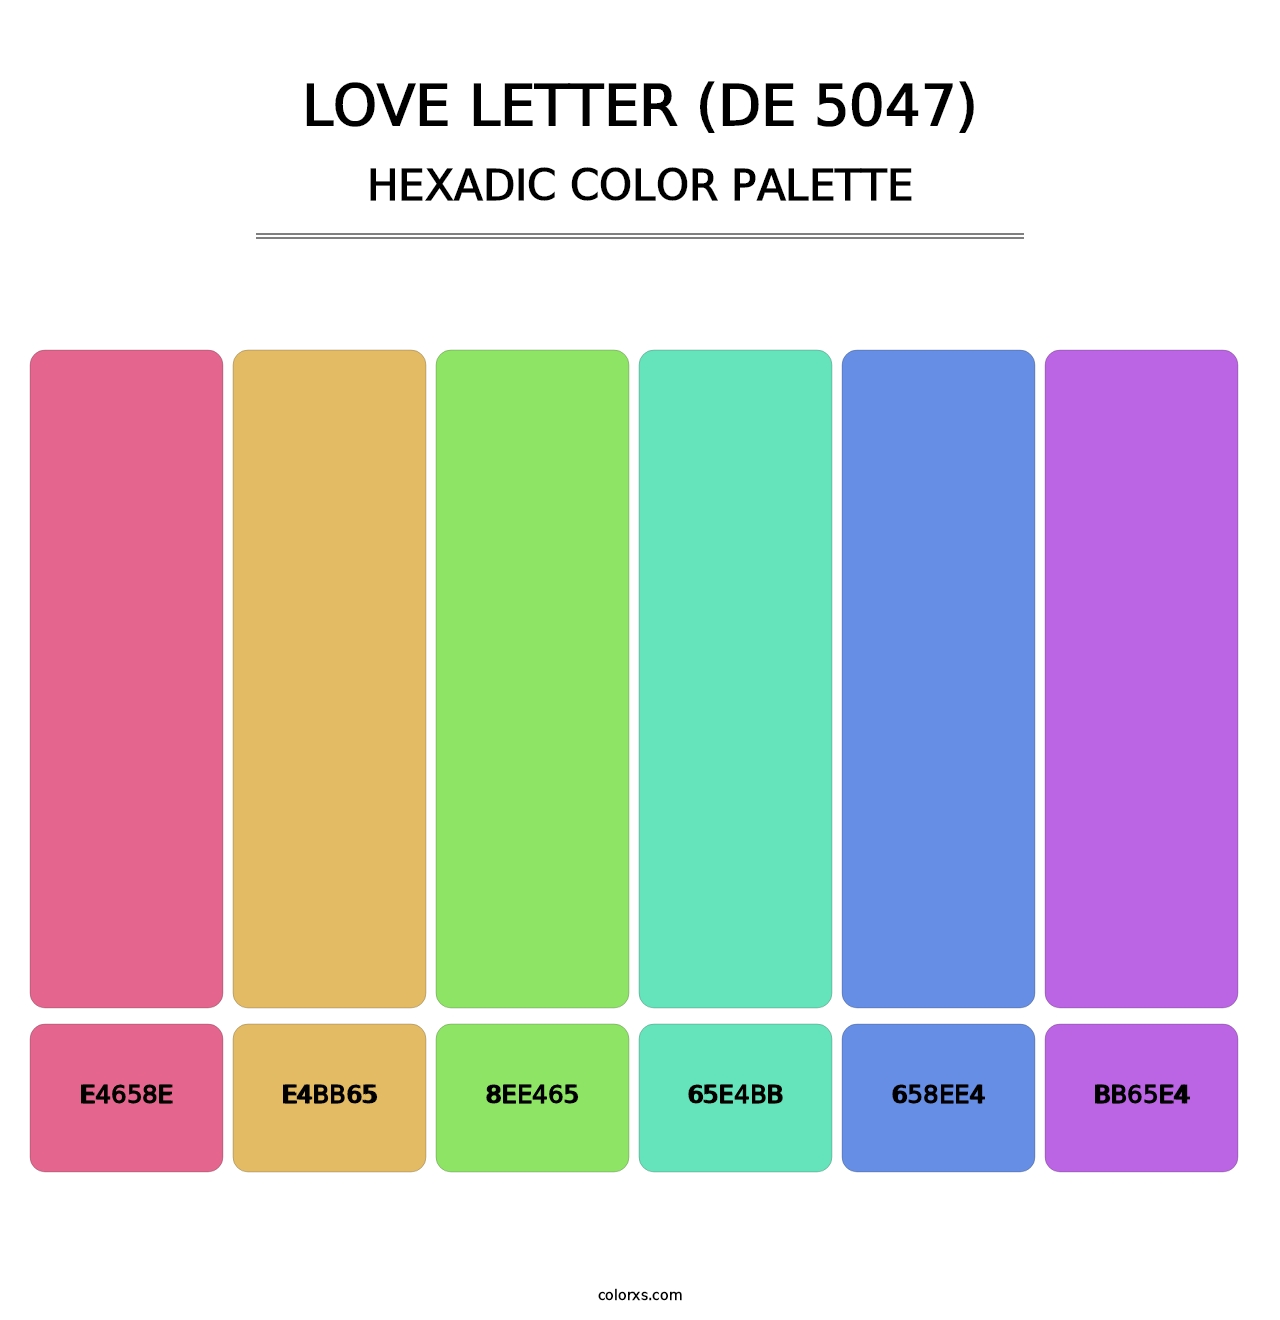 Love Letter (DE 5047) - Hexadic Color Palette